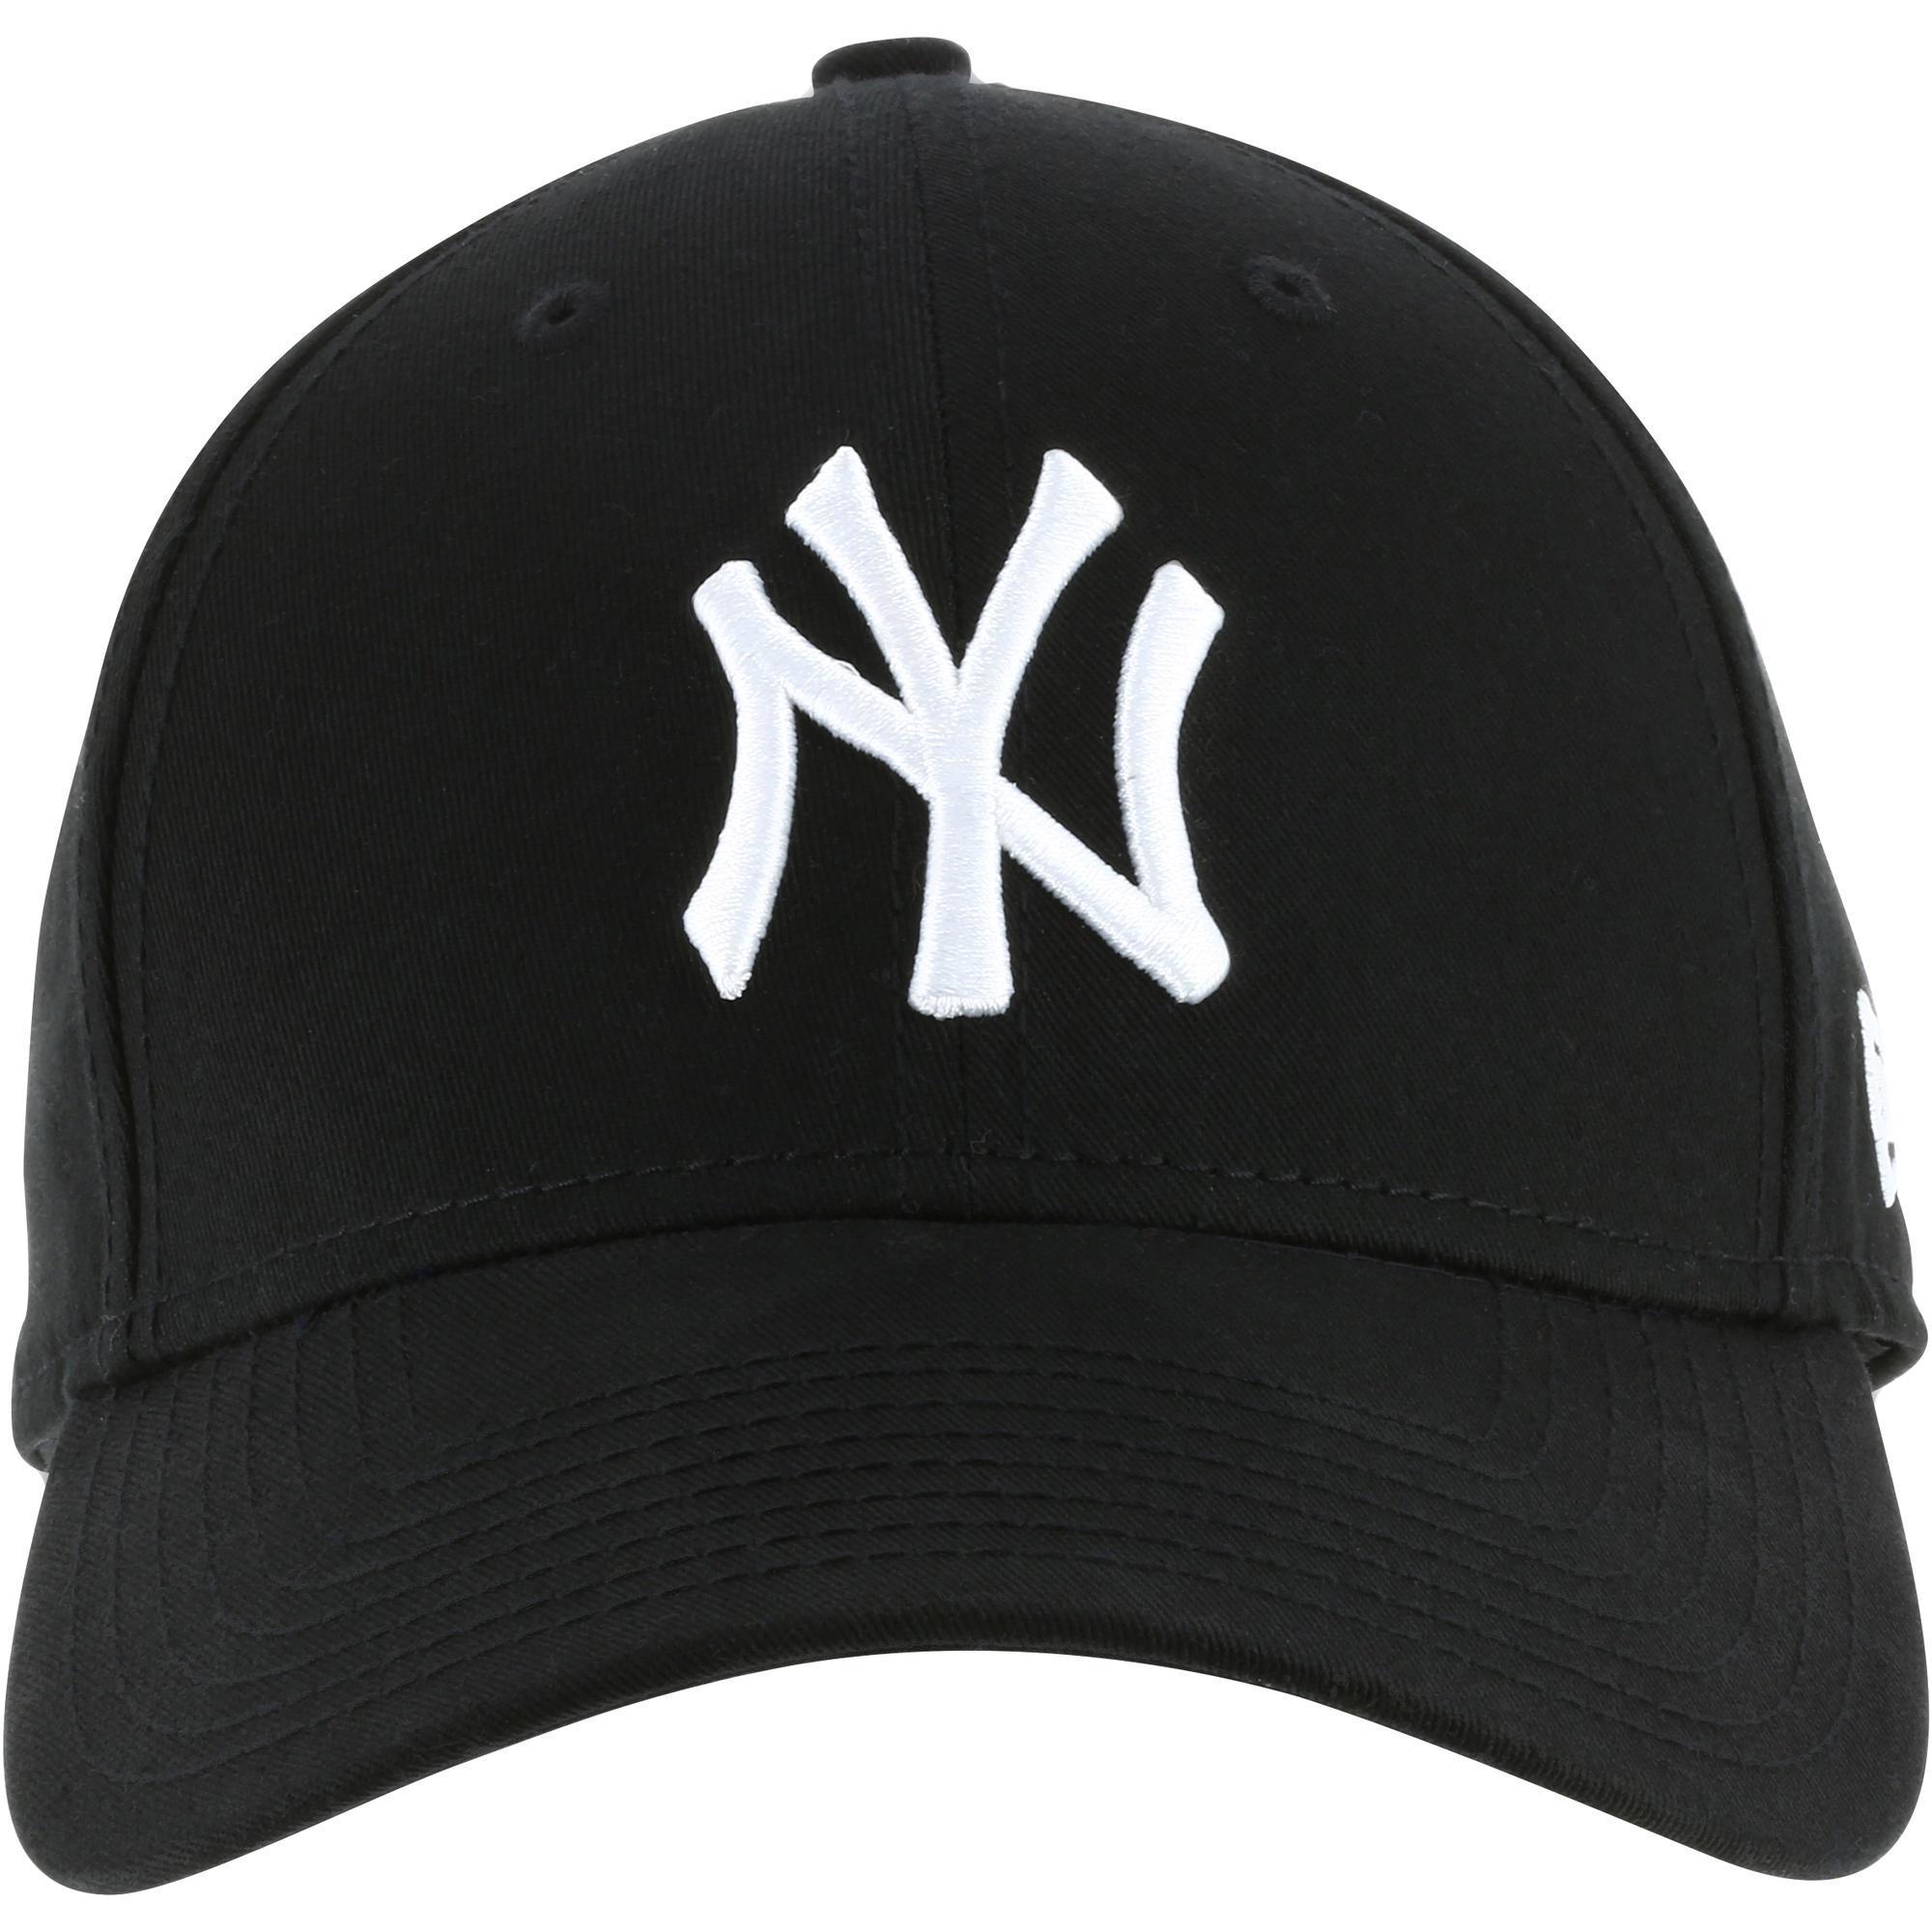 New York Yankees Adult Baseball Cap 